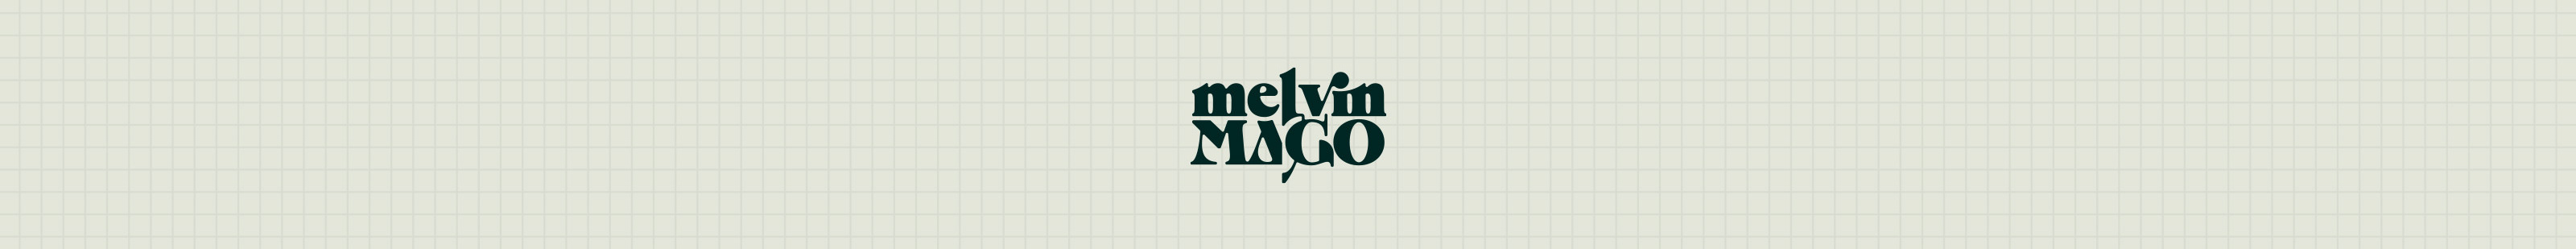 Melvin Mago's profile banner